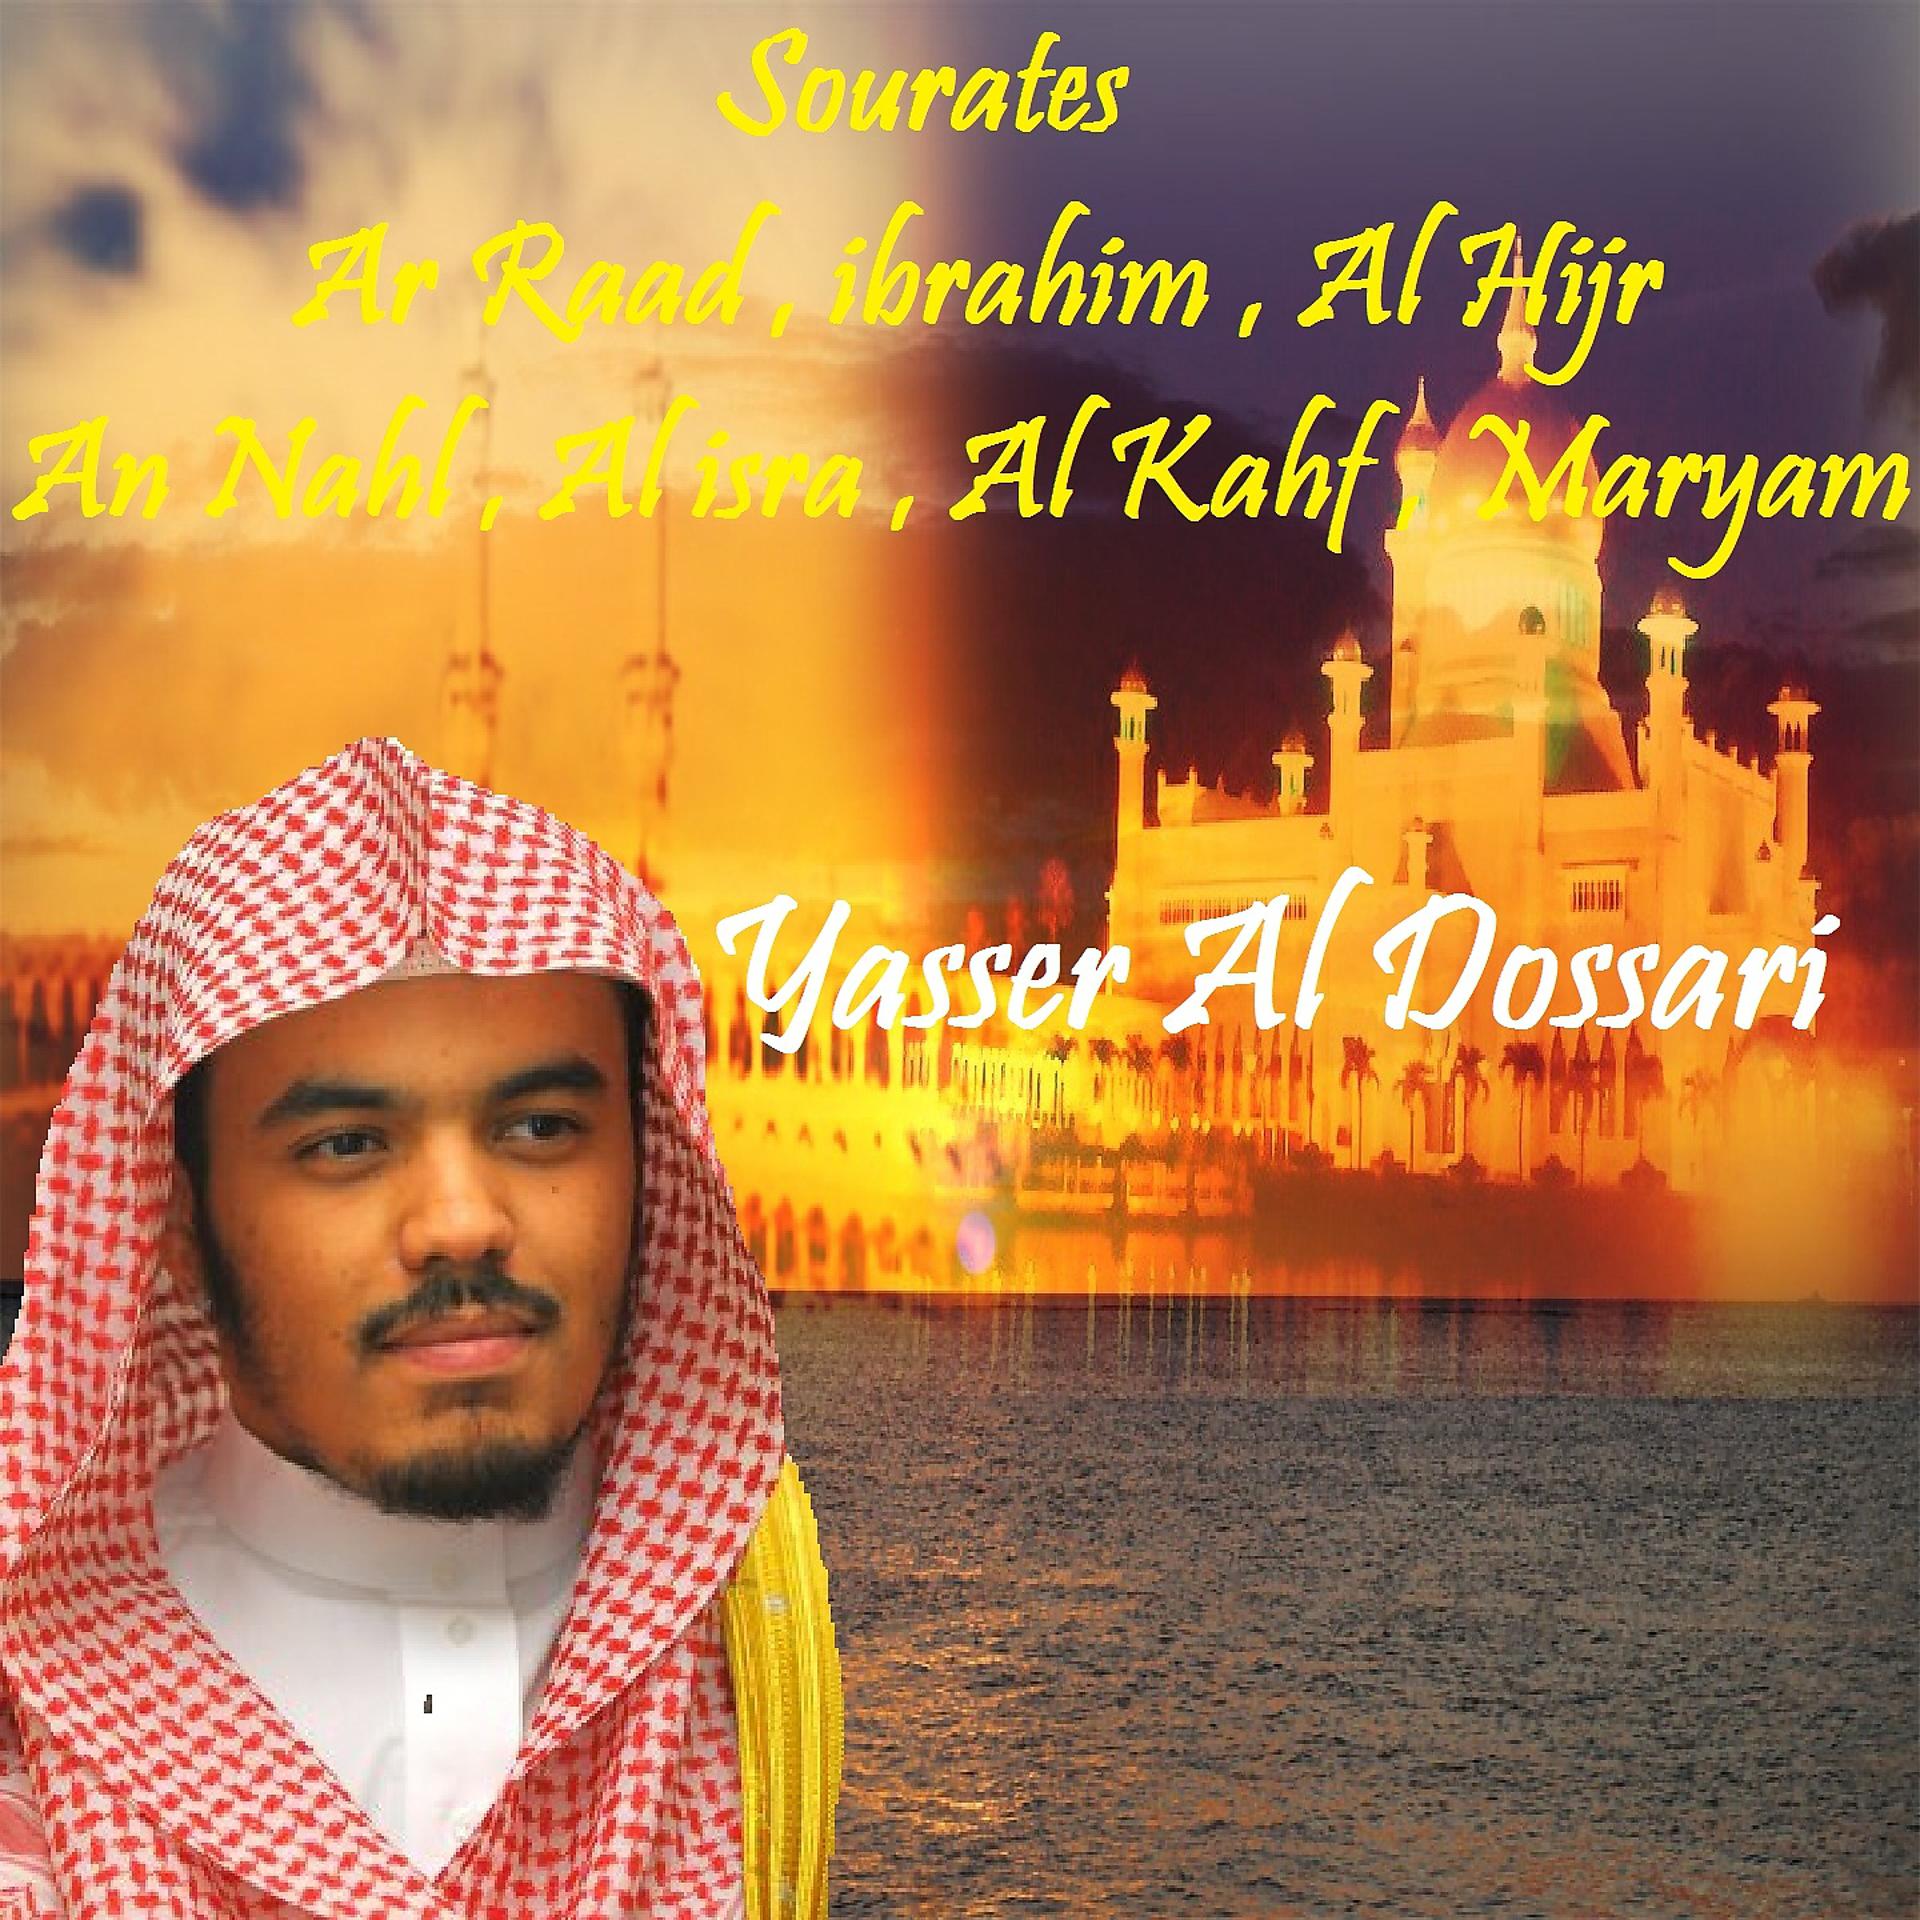 Постер альбома Sourates Ar Raad , ibrahim , Al Hijr , An Nahl , Al isra , Al Kahf , Maryam